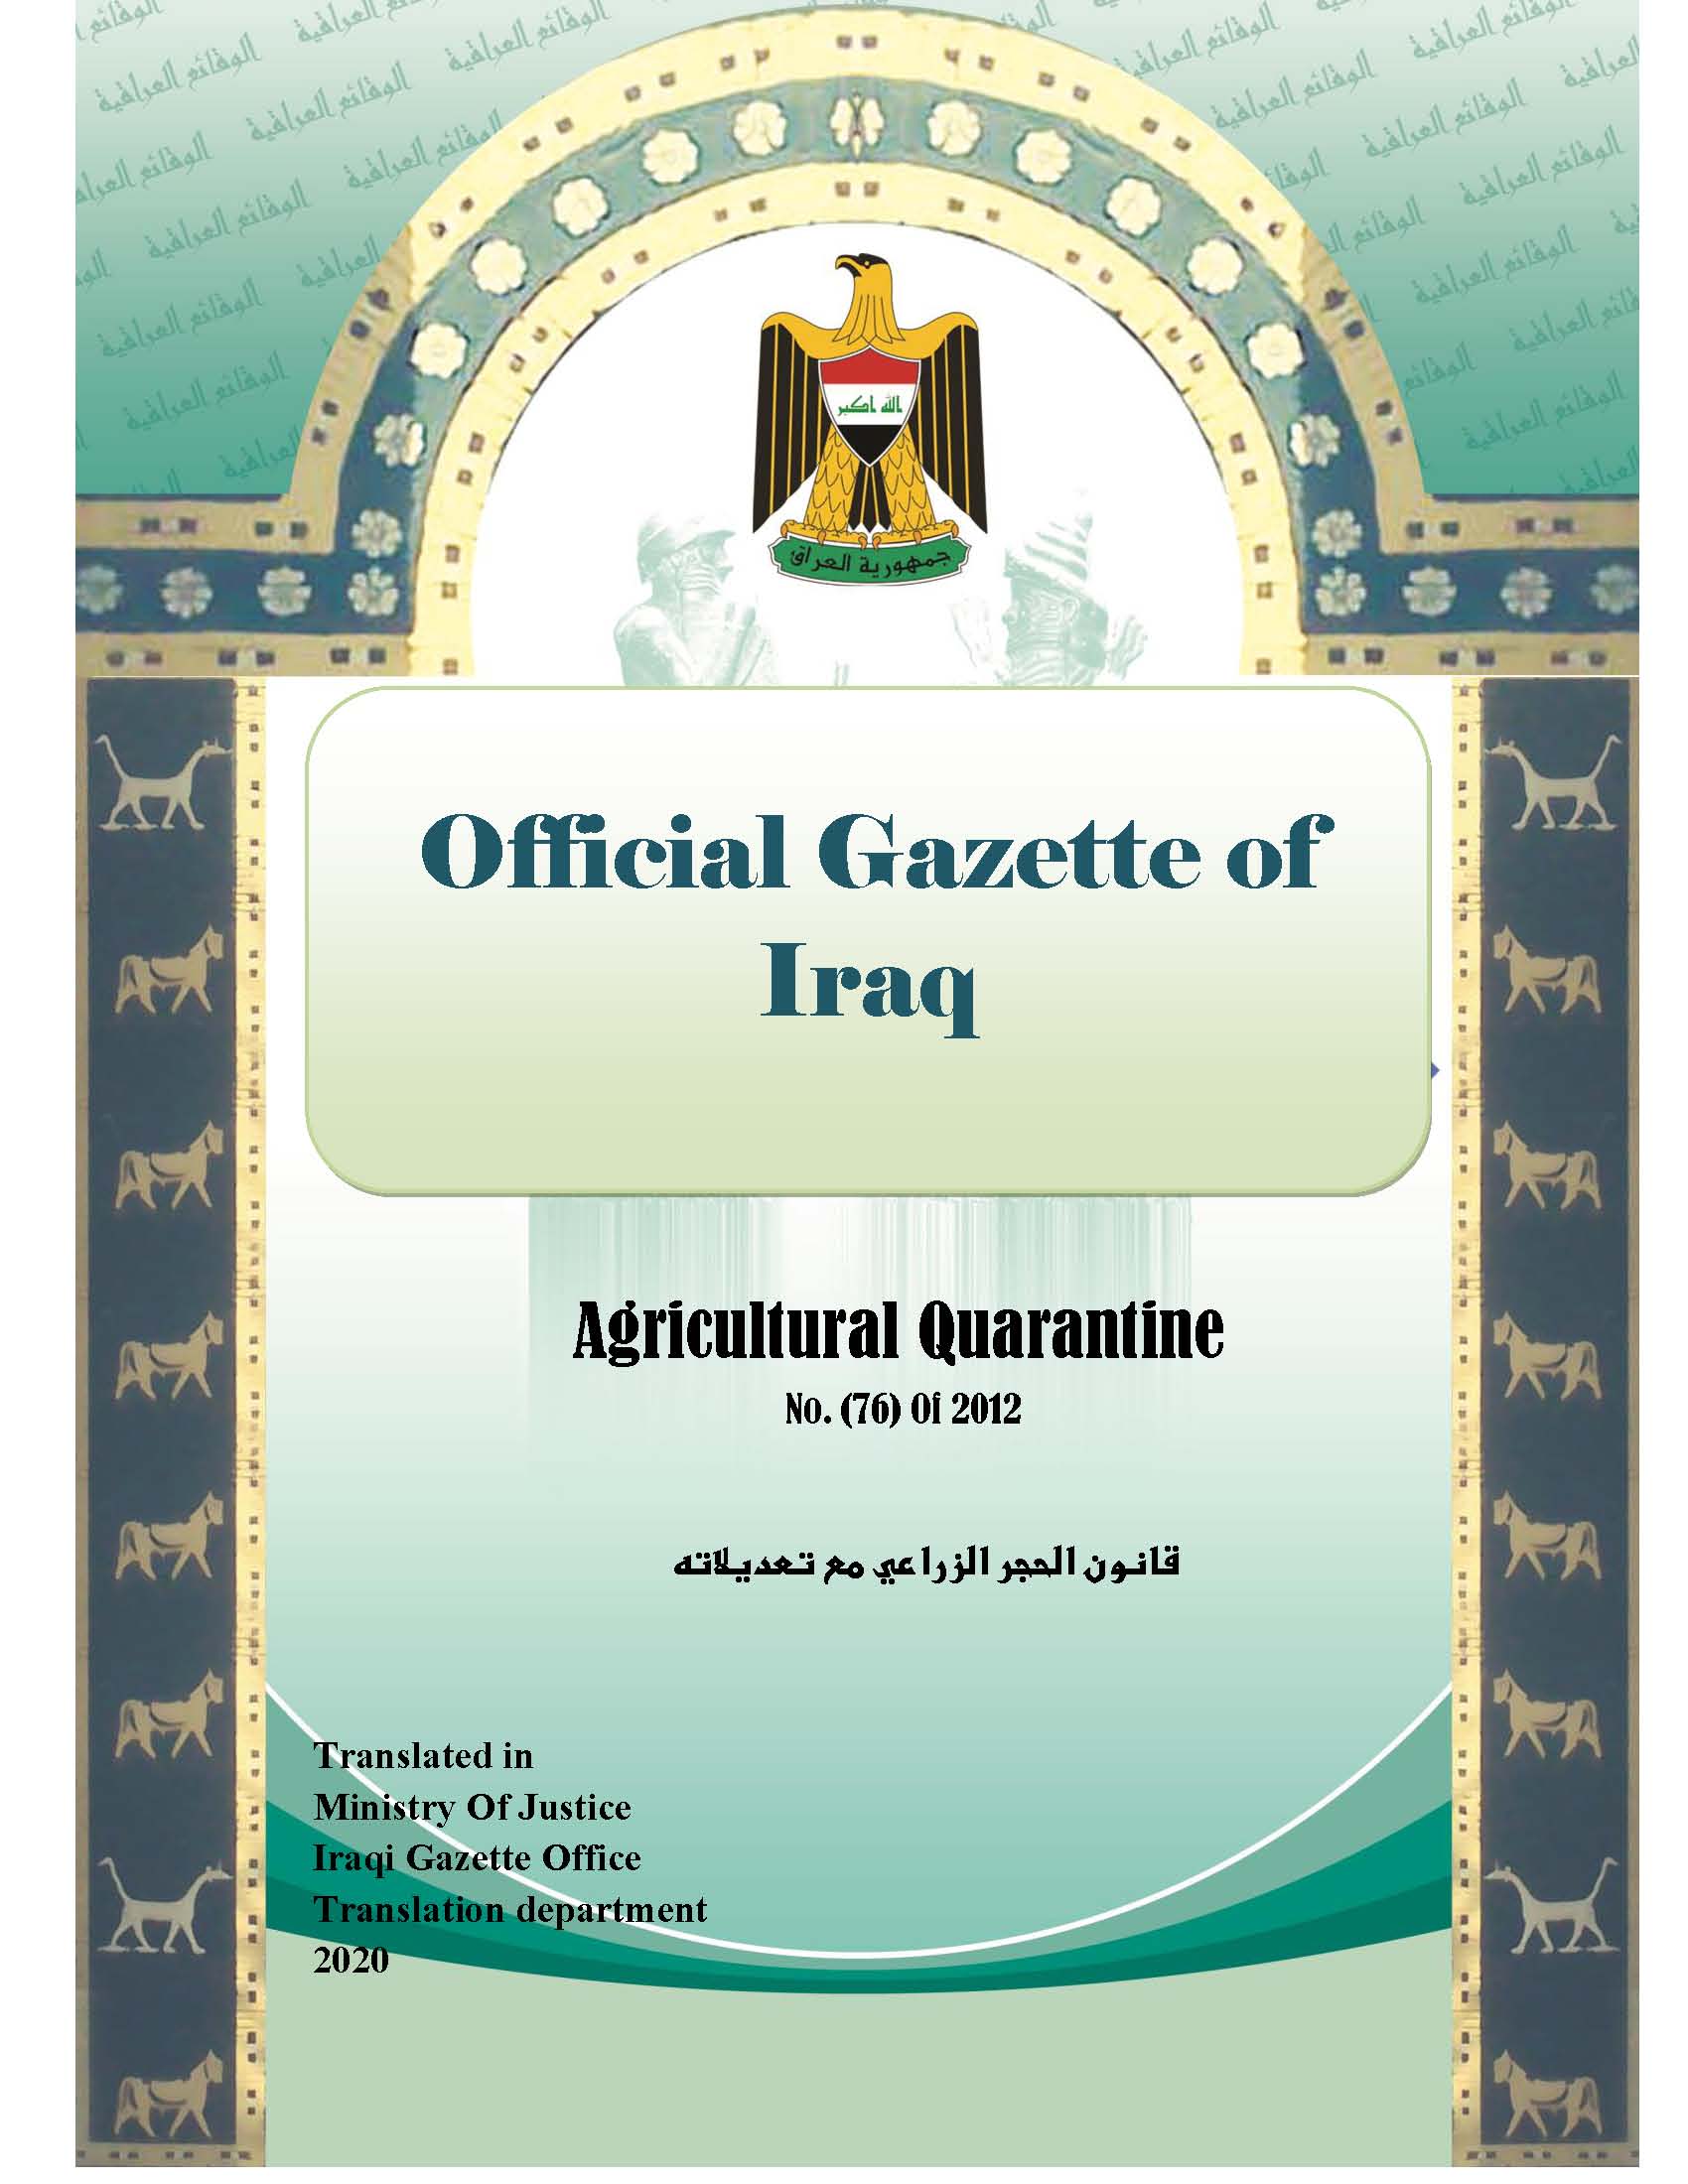    Agricultural Quarantine No. (76) of 2012